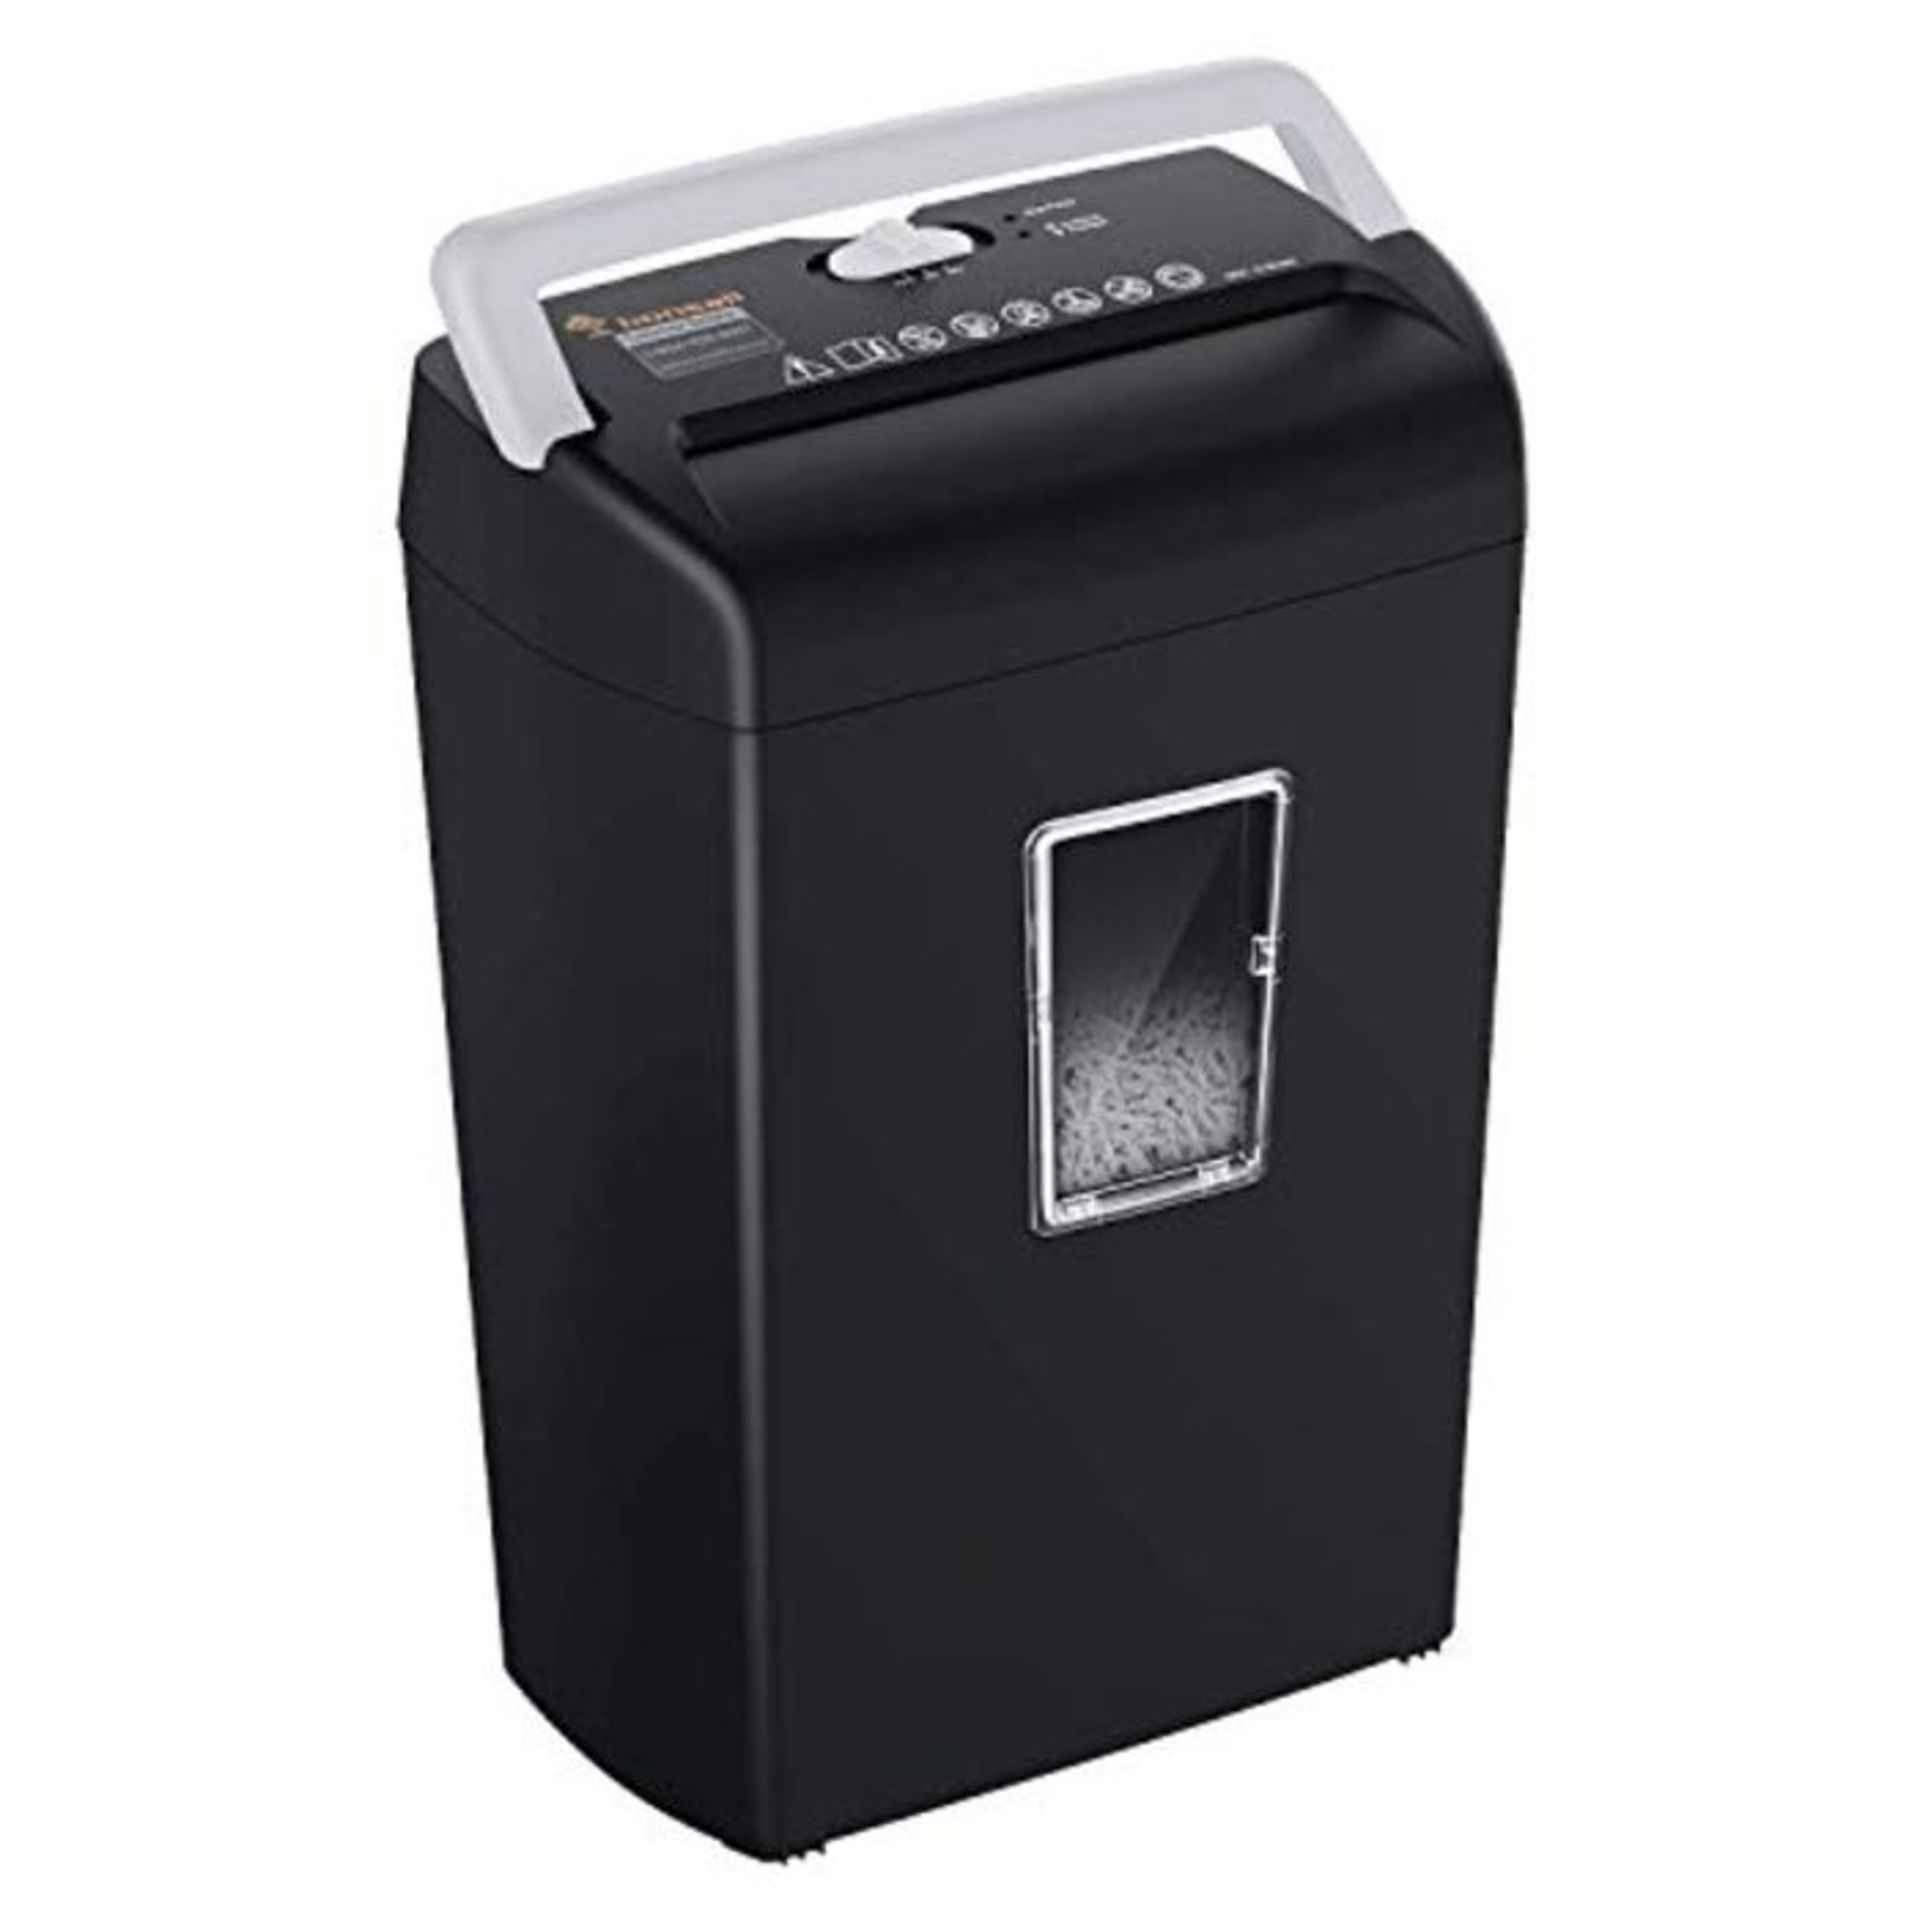 Bonsaii 10-Sheet Cross-Cut Paper and Credit Card Shredder Machine, 21-Litre Wastebaske